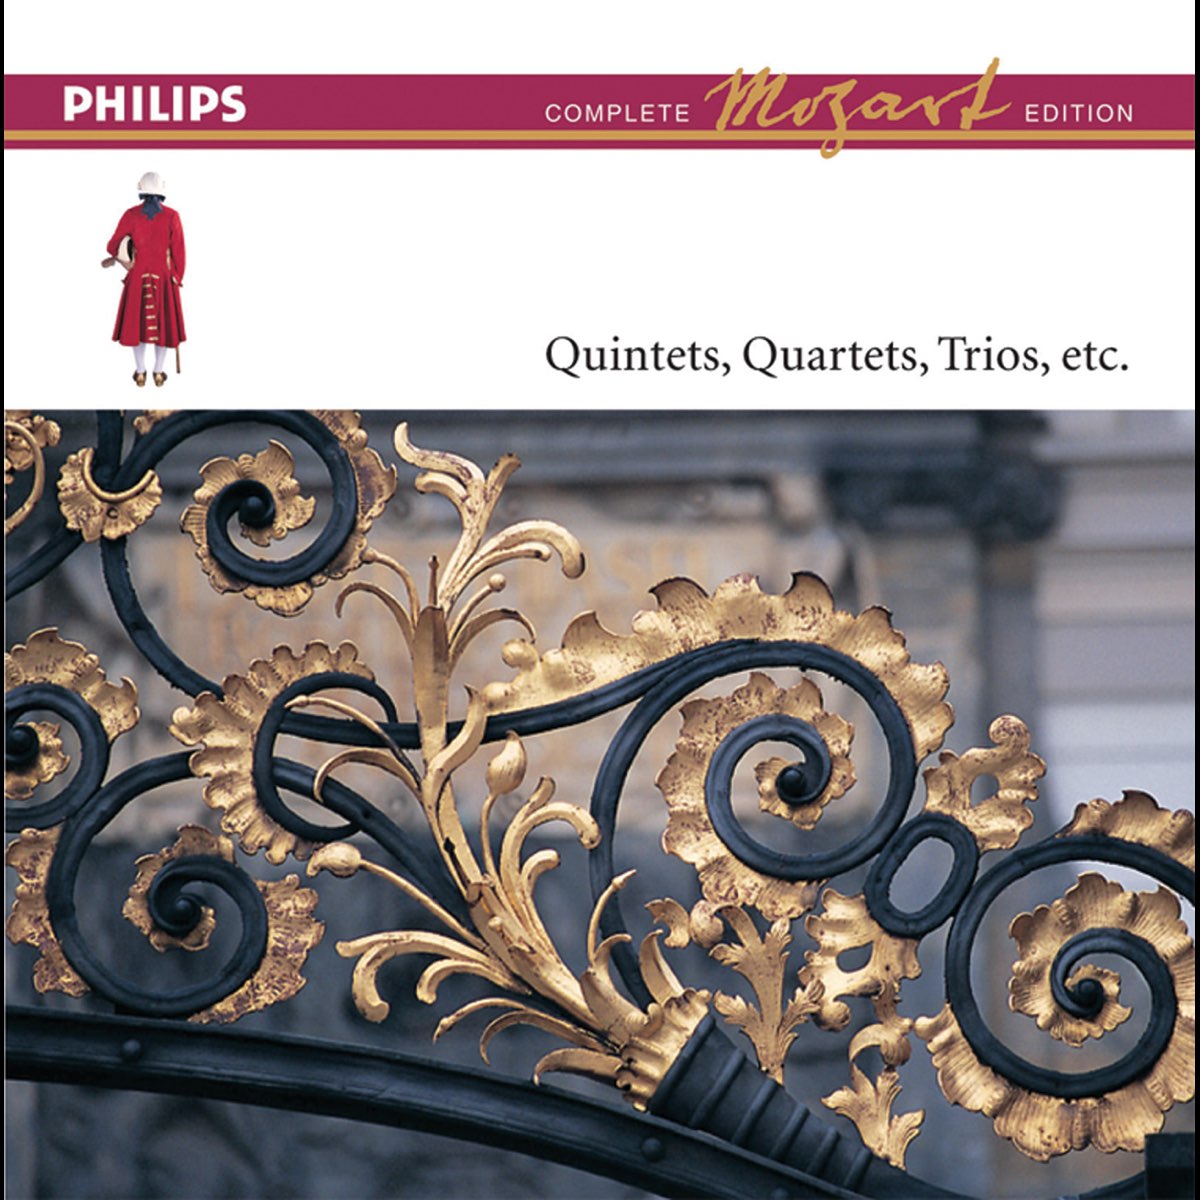 Complete Mozart Edition - The Quintets & Quartets for Strings